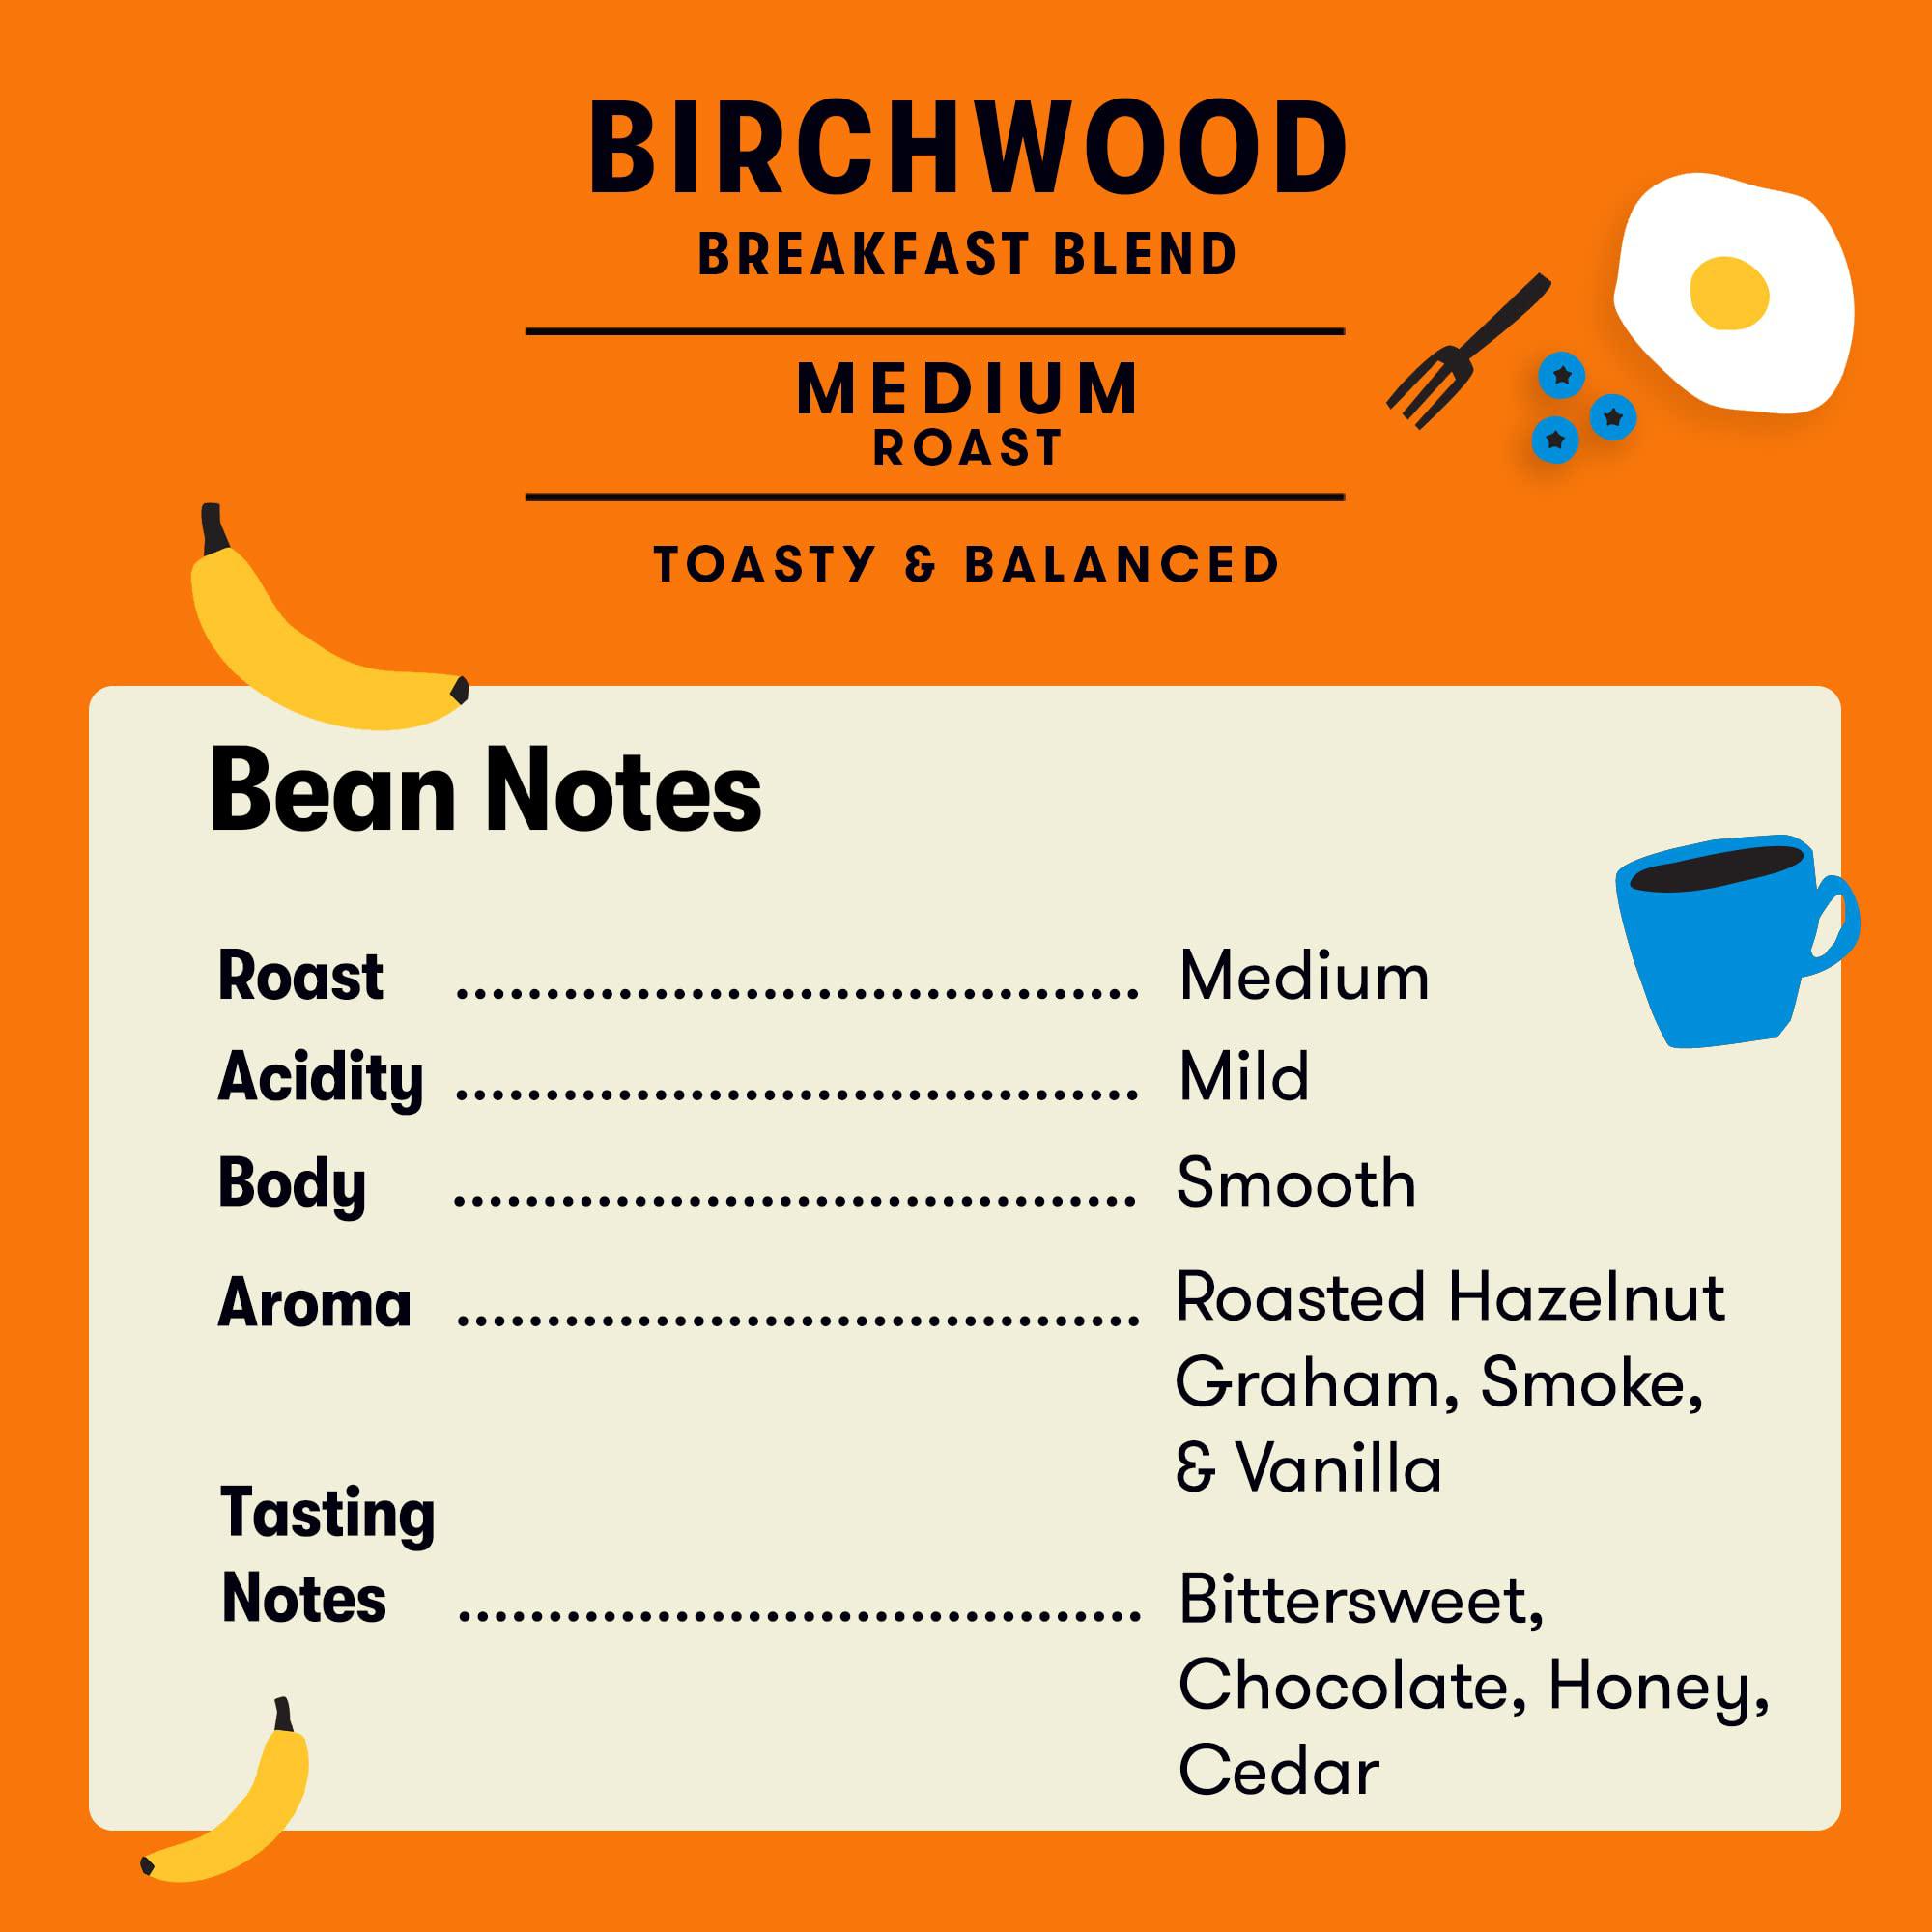 peace coffee birchwood breakfast blend | 20 oz whole bean medium roast | organic fair trade coffee |smooth, mild flavor | sum